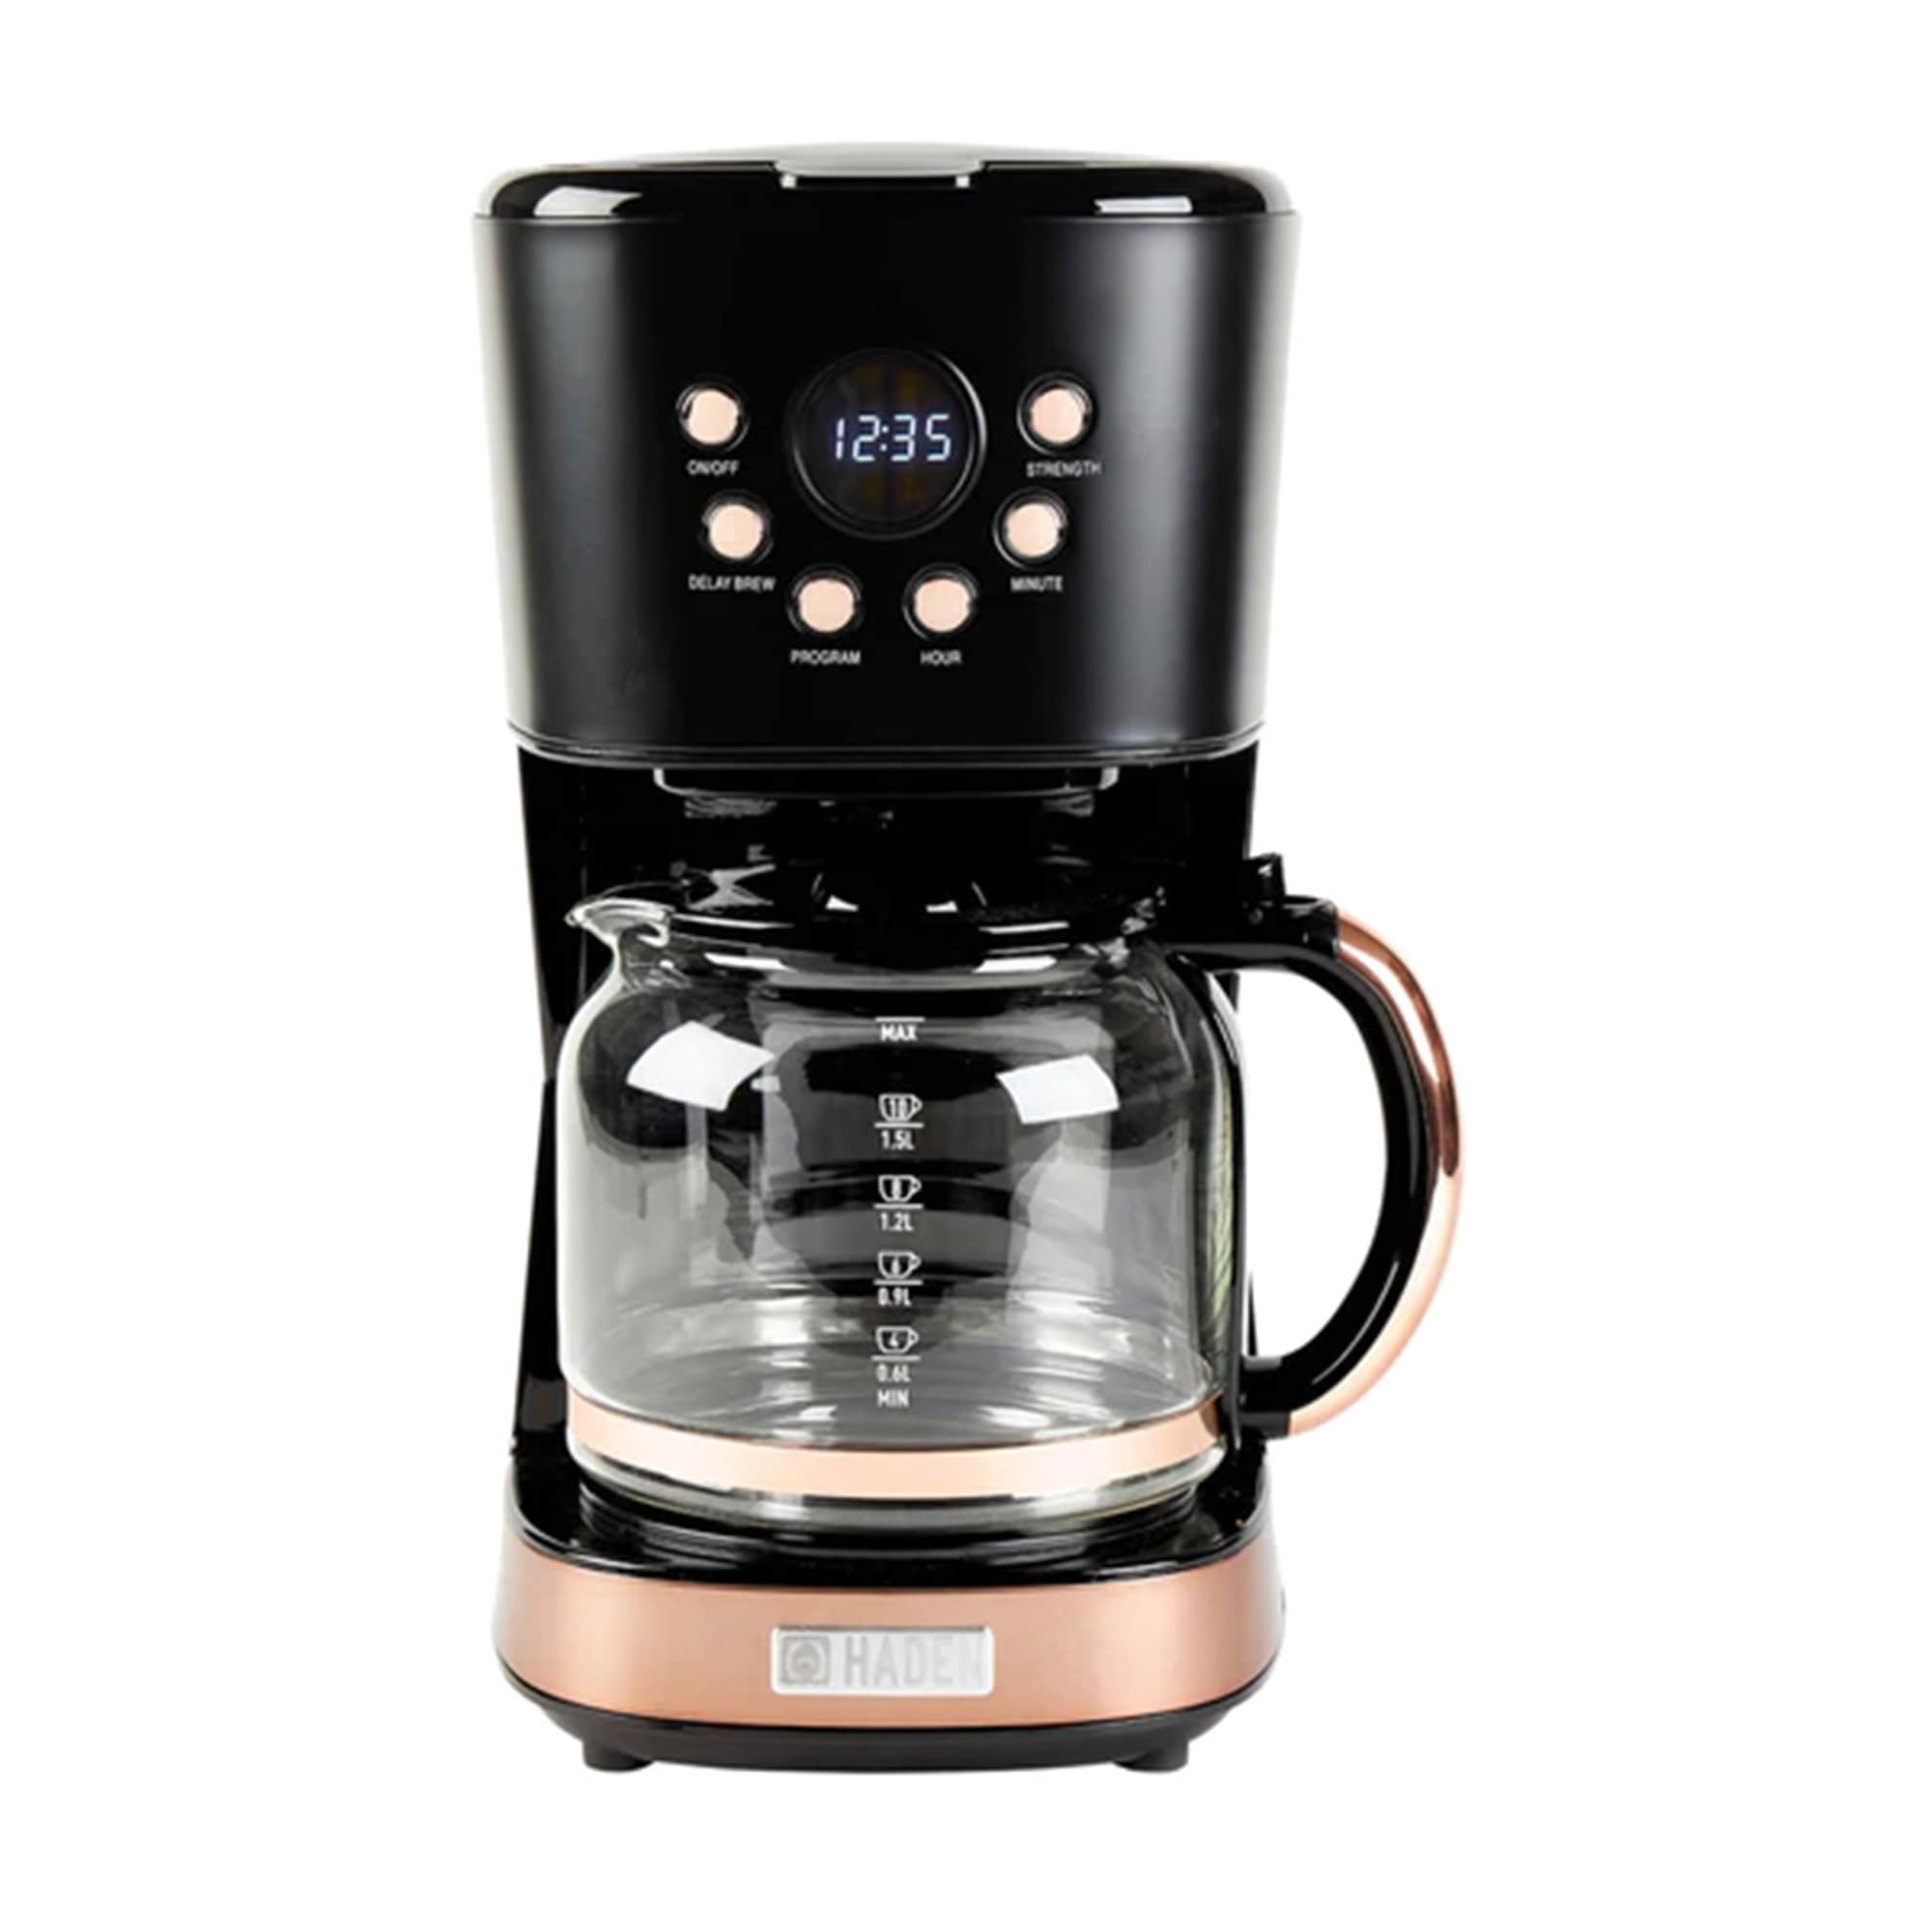 https://ak1.ostkcdn.com/images/products/is/images/direct/4f97502e9accb6b0f79f128b54758fbb36cbfdfc/Haden-Heritage-12-Cup-Programmable-Retro-Coffee-Maker-Machine%2C-Black-Copper.jpg